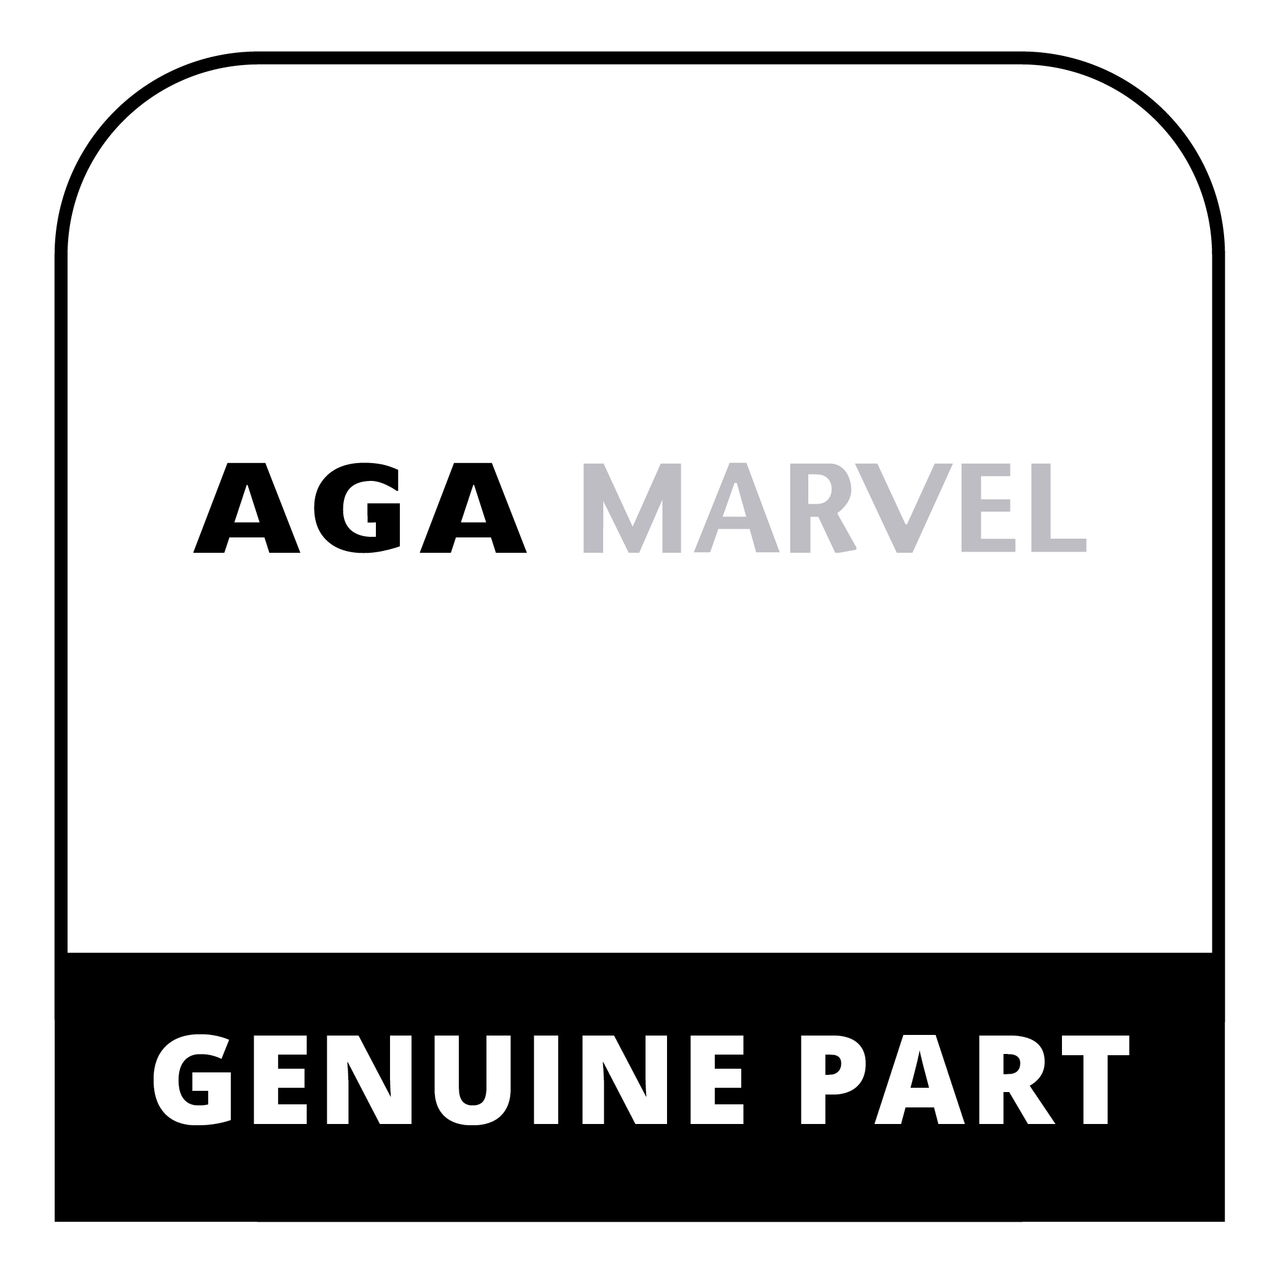 AGA Marvel R4768 - Heat Exch. (Giannoni)480Ag/Al - Genuine AGA Marvel Part